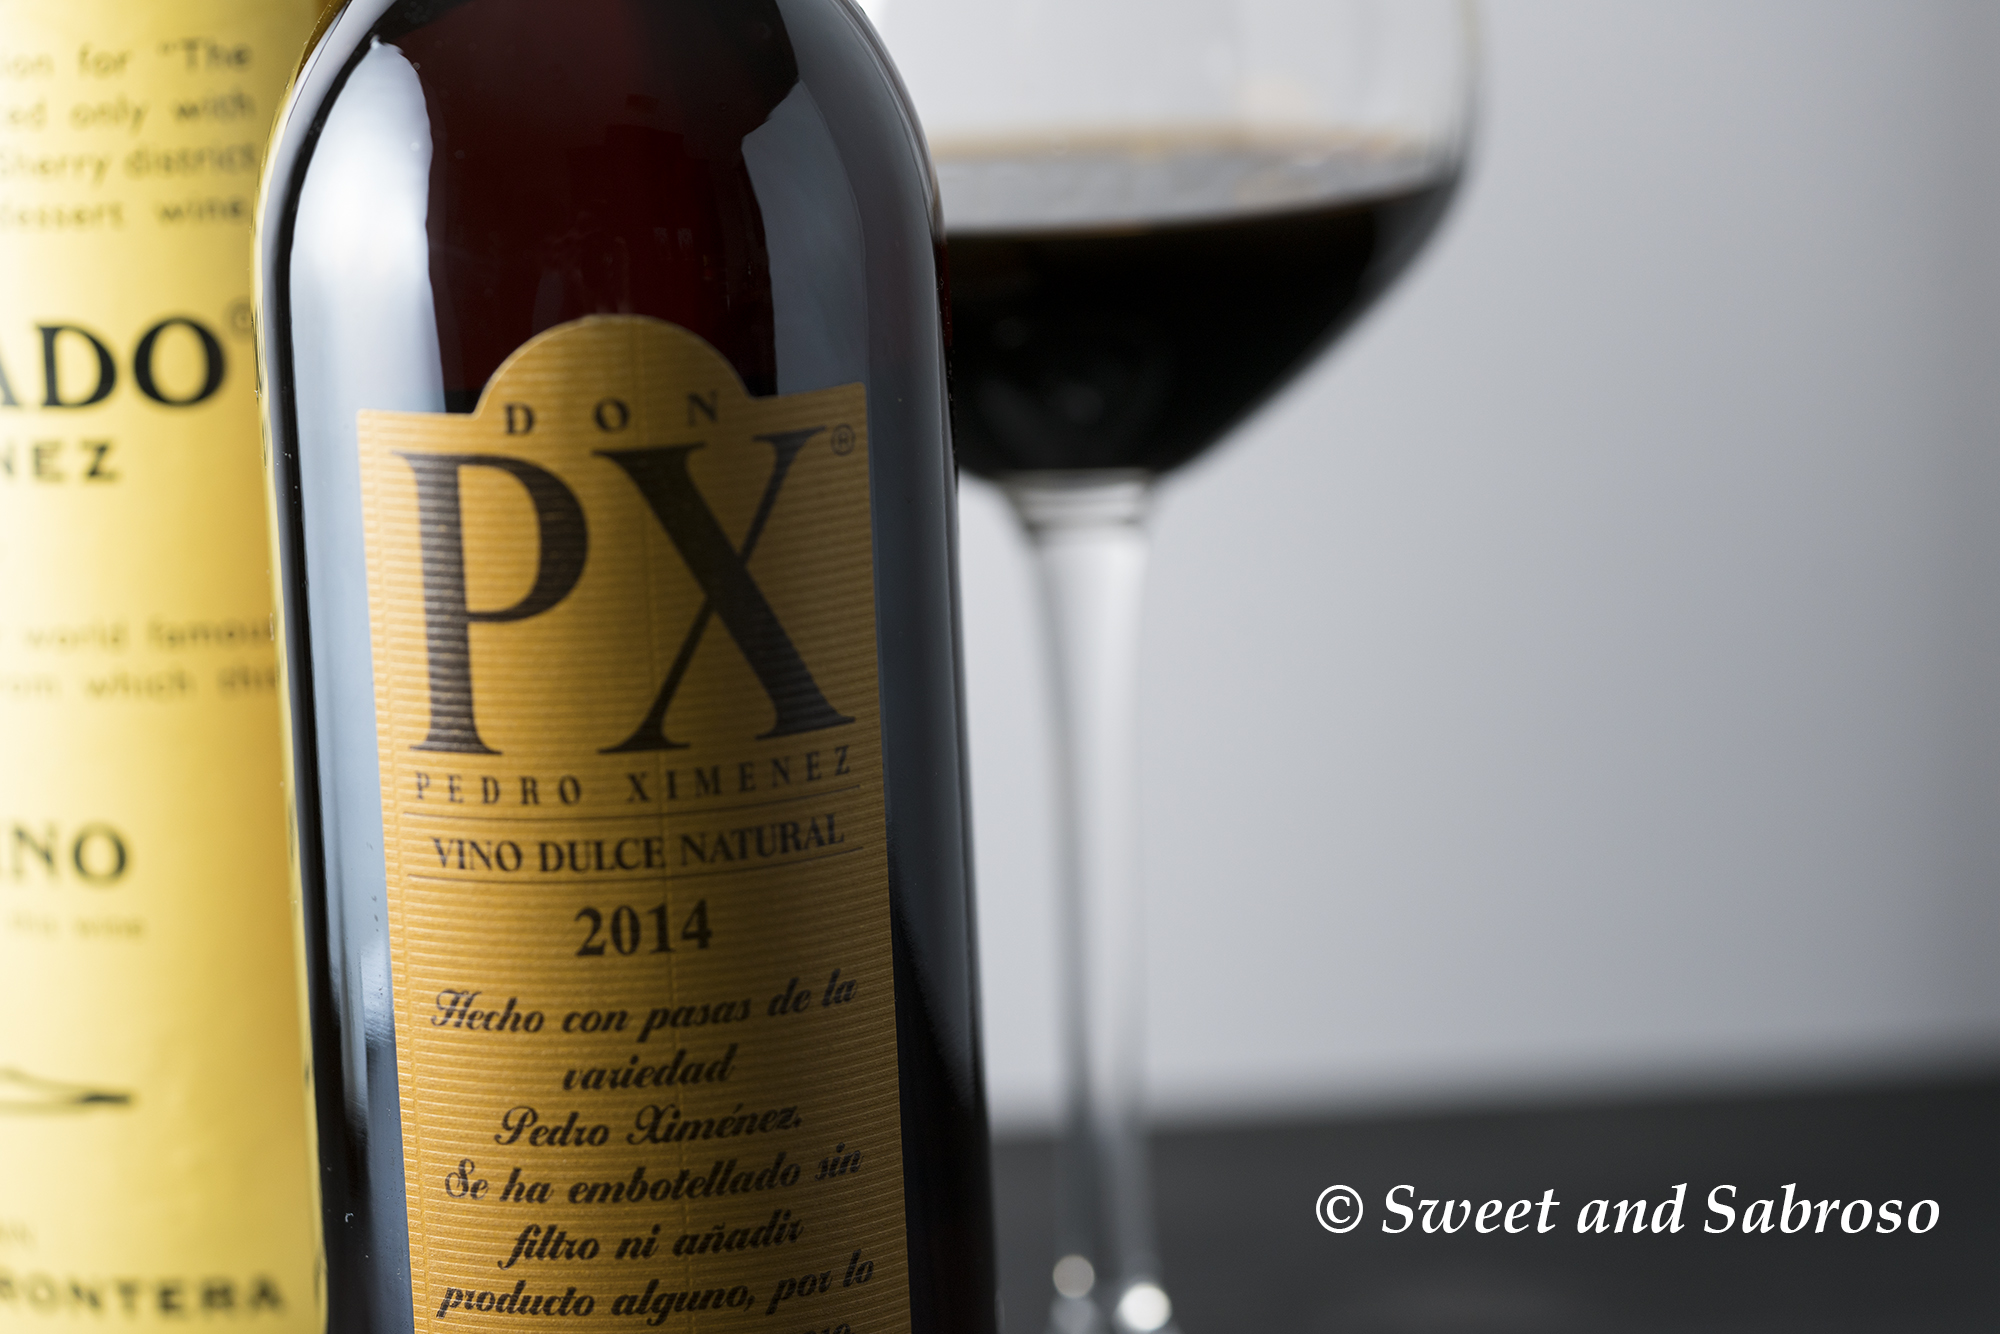 Pedro-Ximenex-PX-Montilla-Moriles-Wine-Bottle-And-Wine-Glass